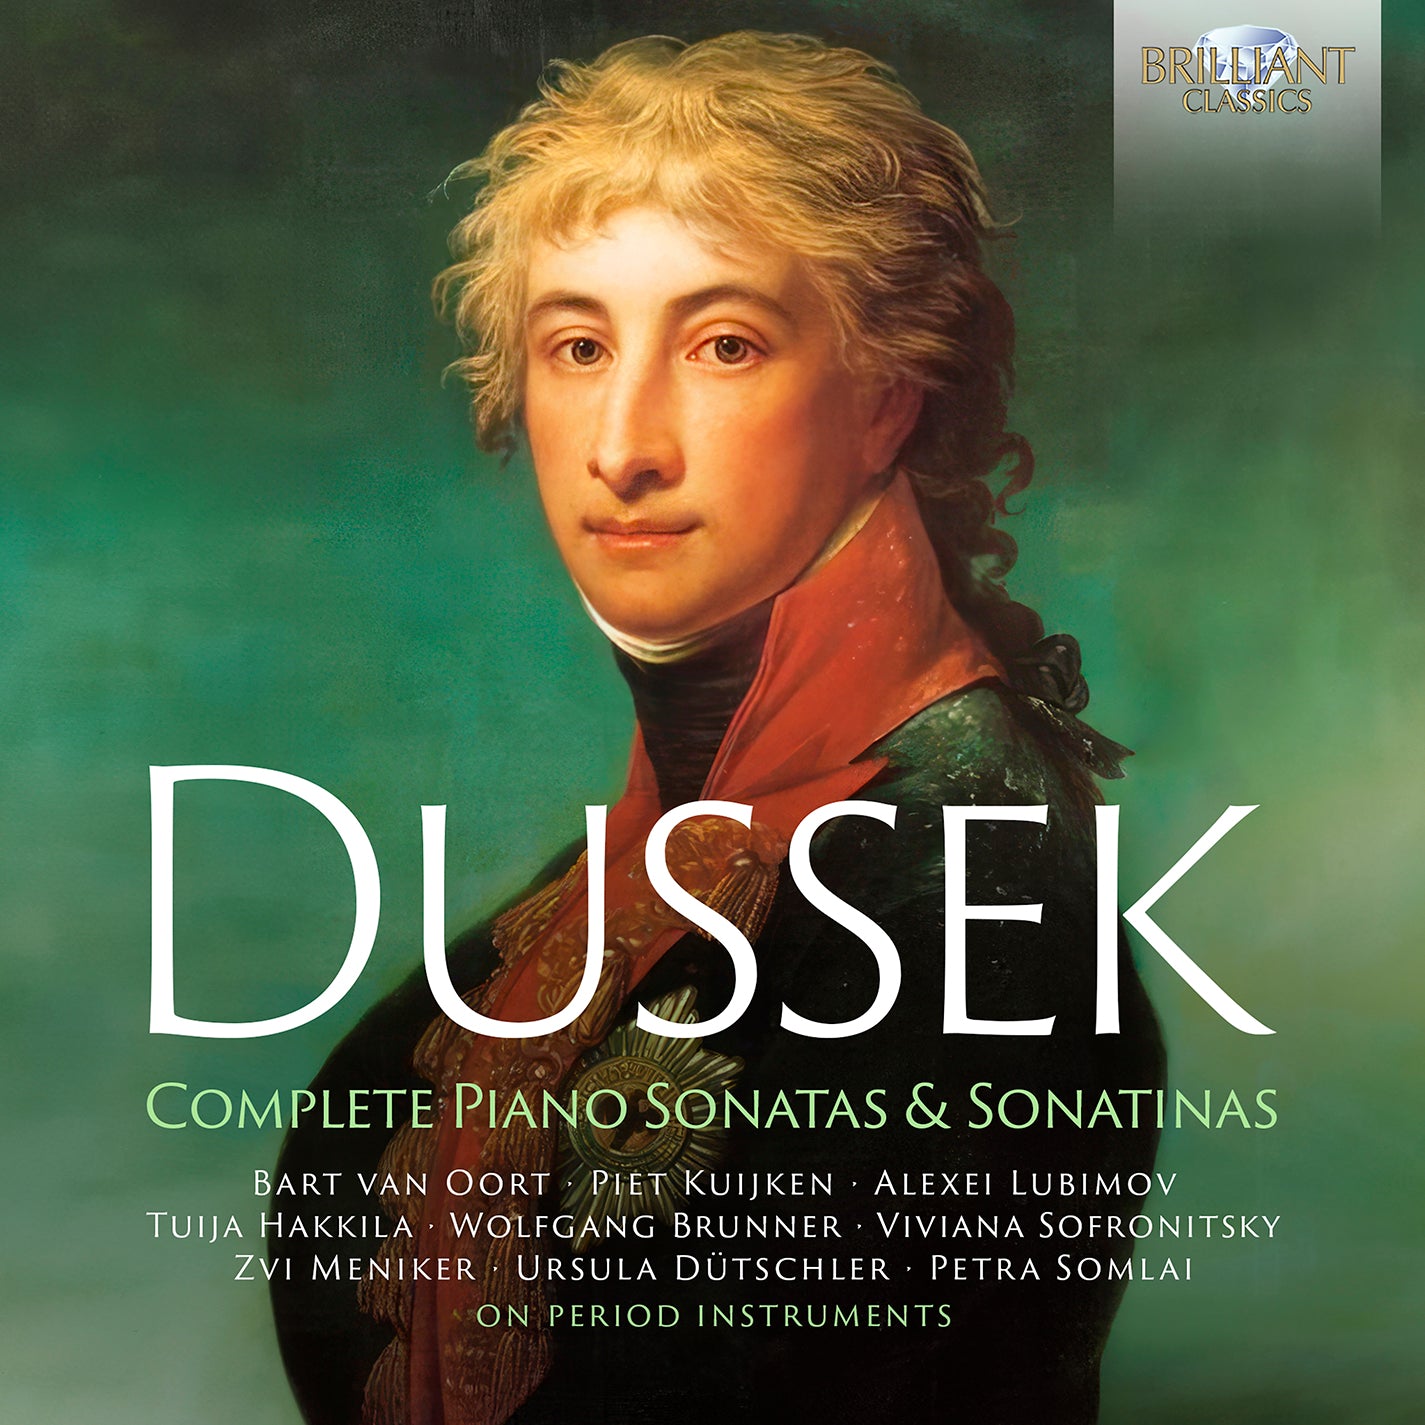 Dussek: Complete Piano Sonatas & Sonatinas on Period Instruments